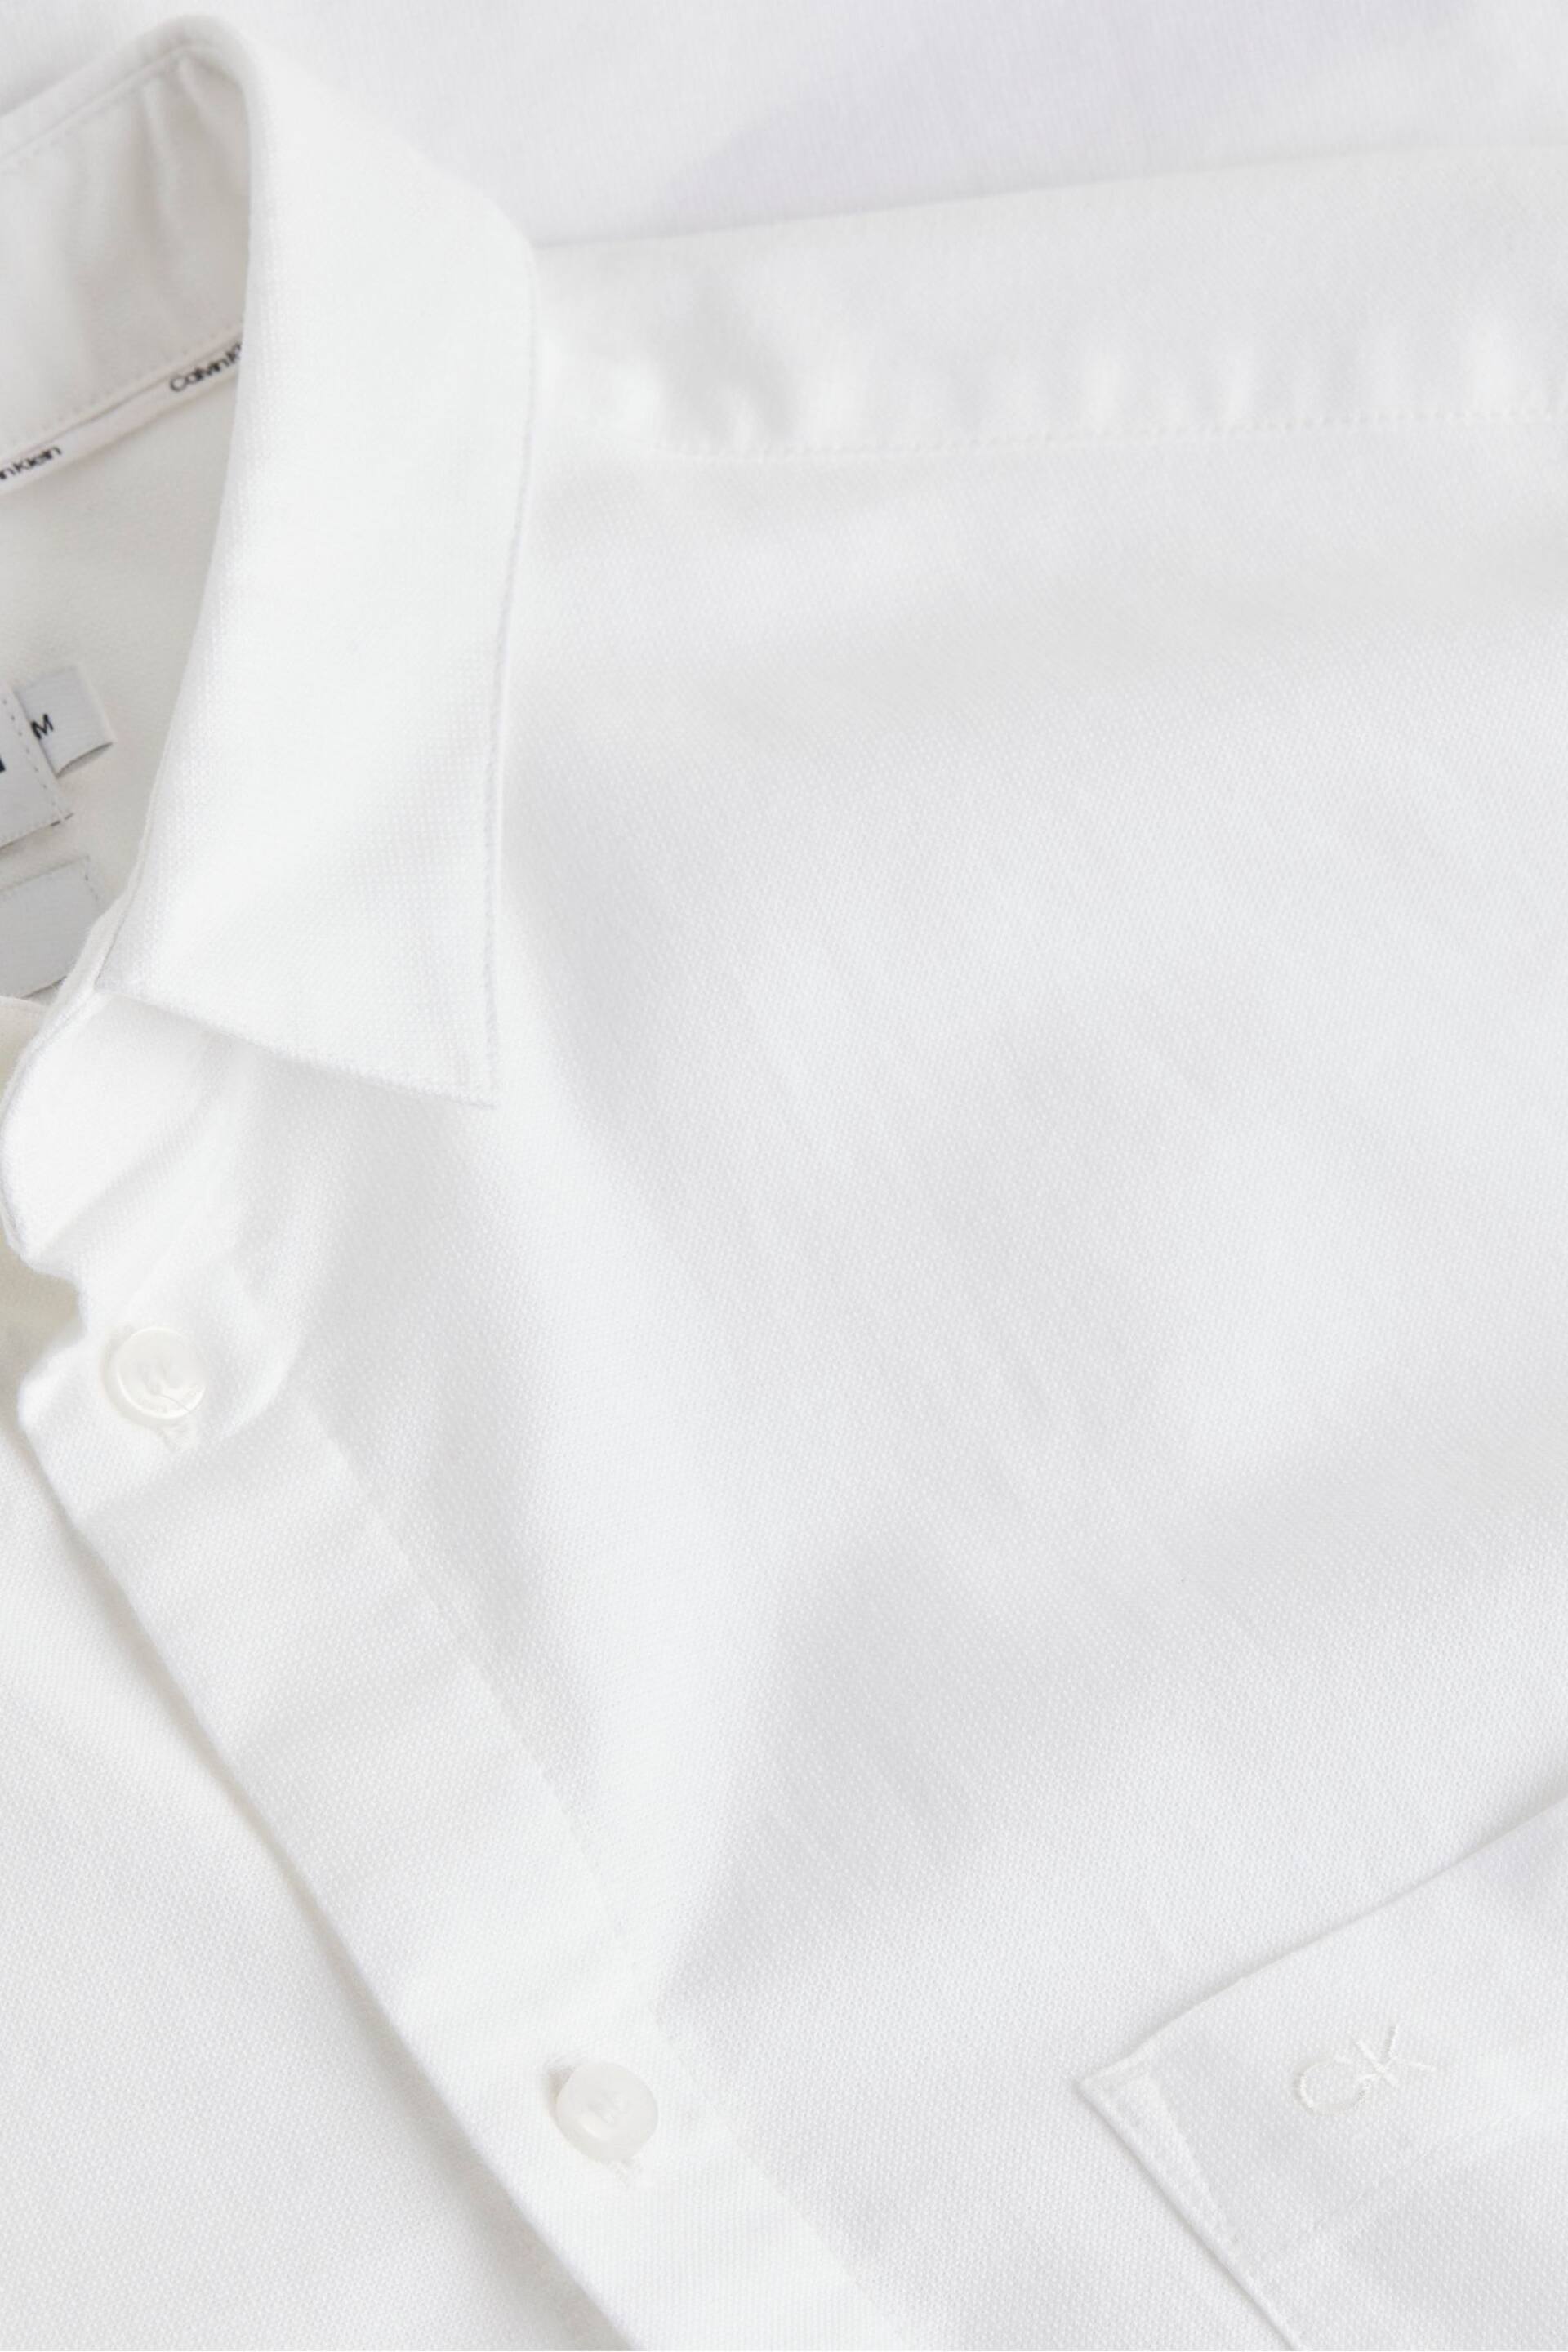 Calvin Klein White Stretch Oxford Shirt - Image 7 of 7